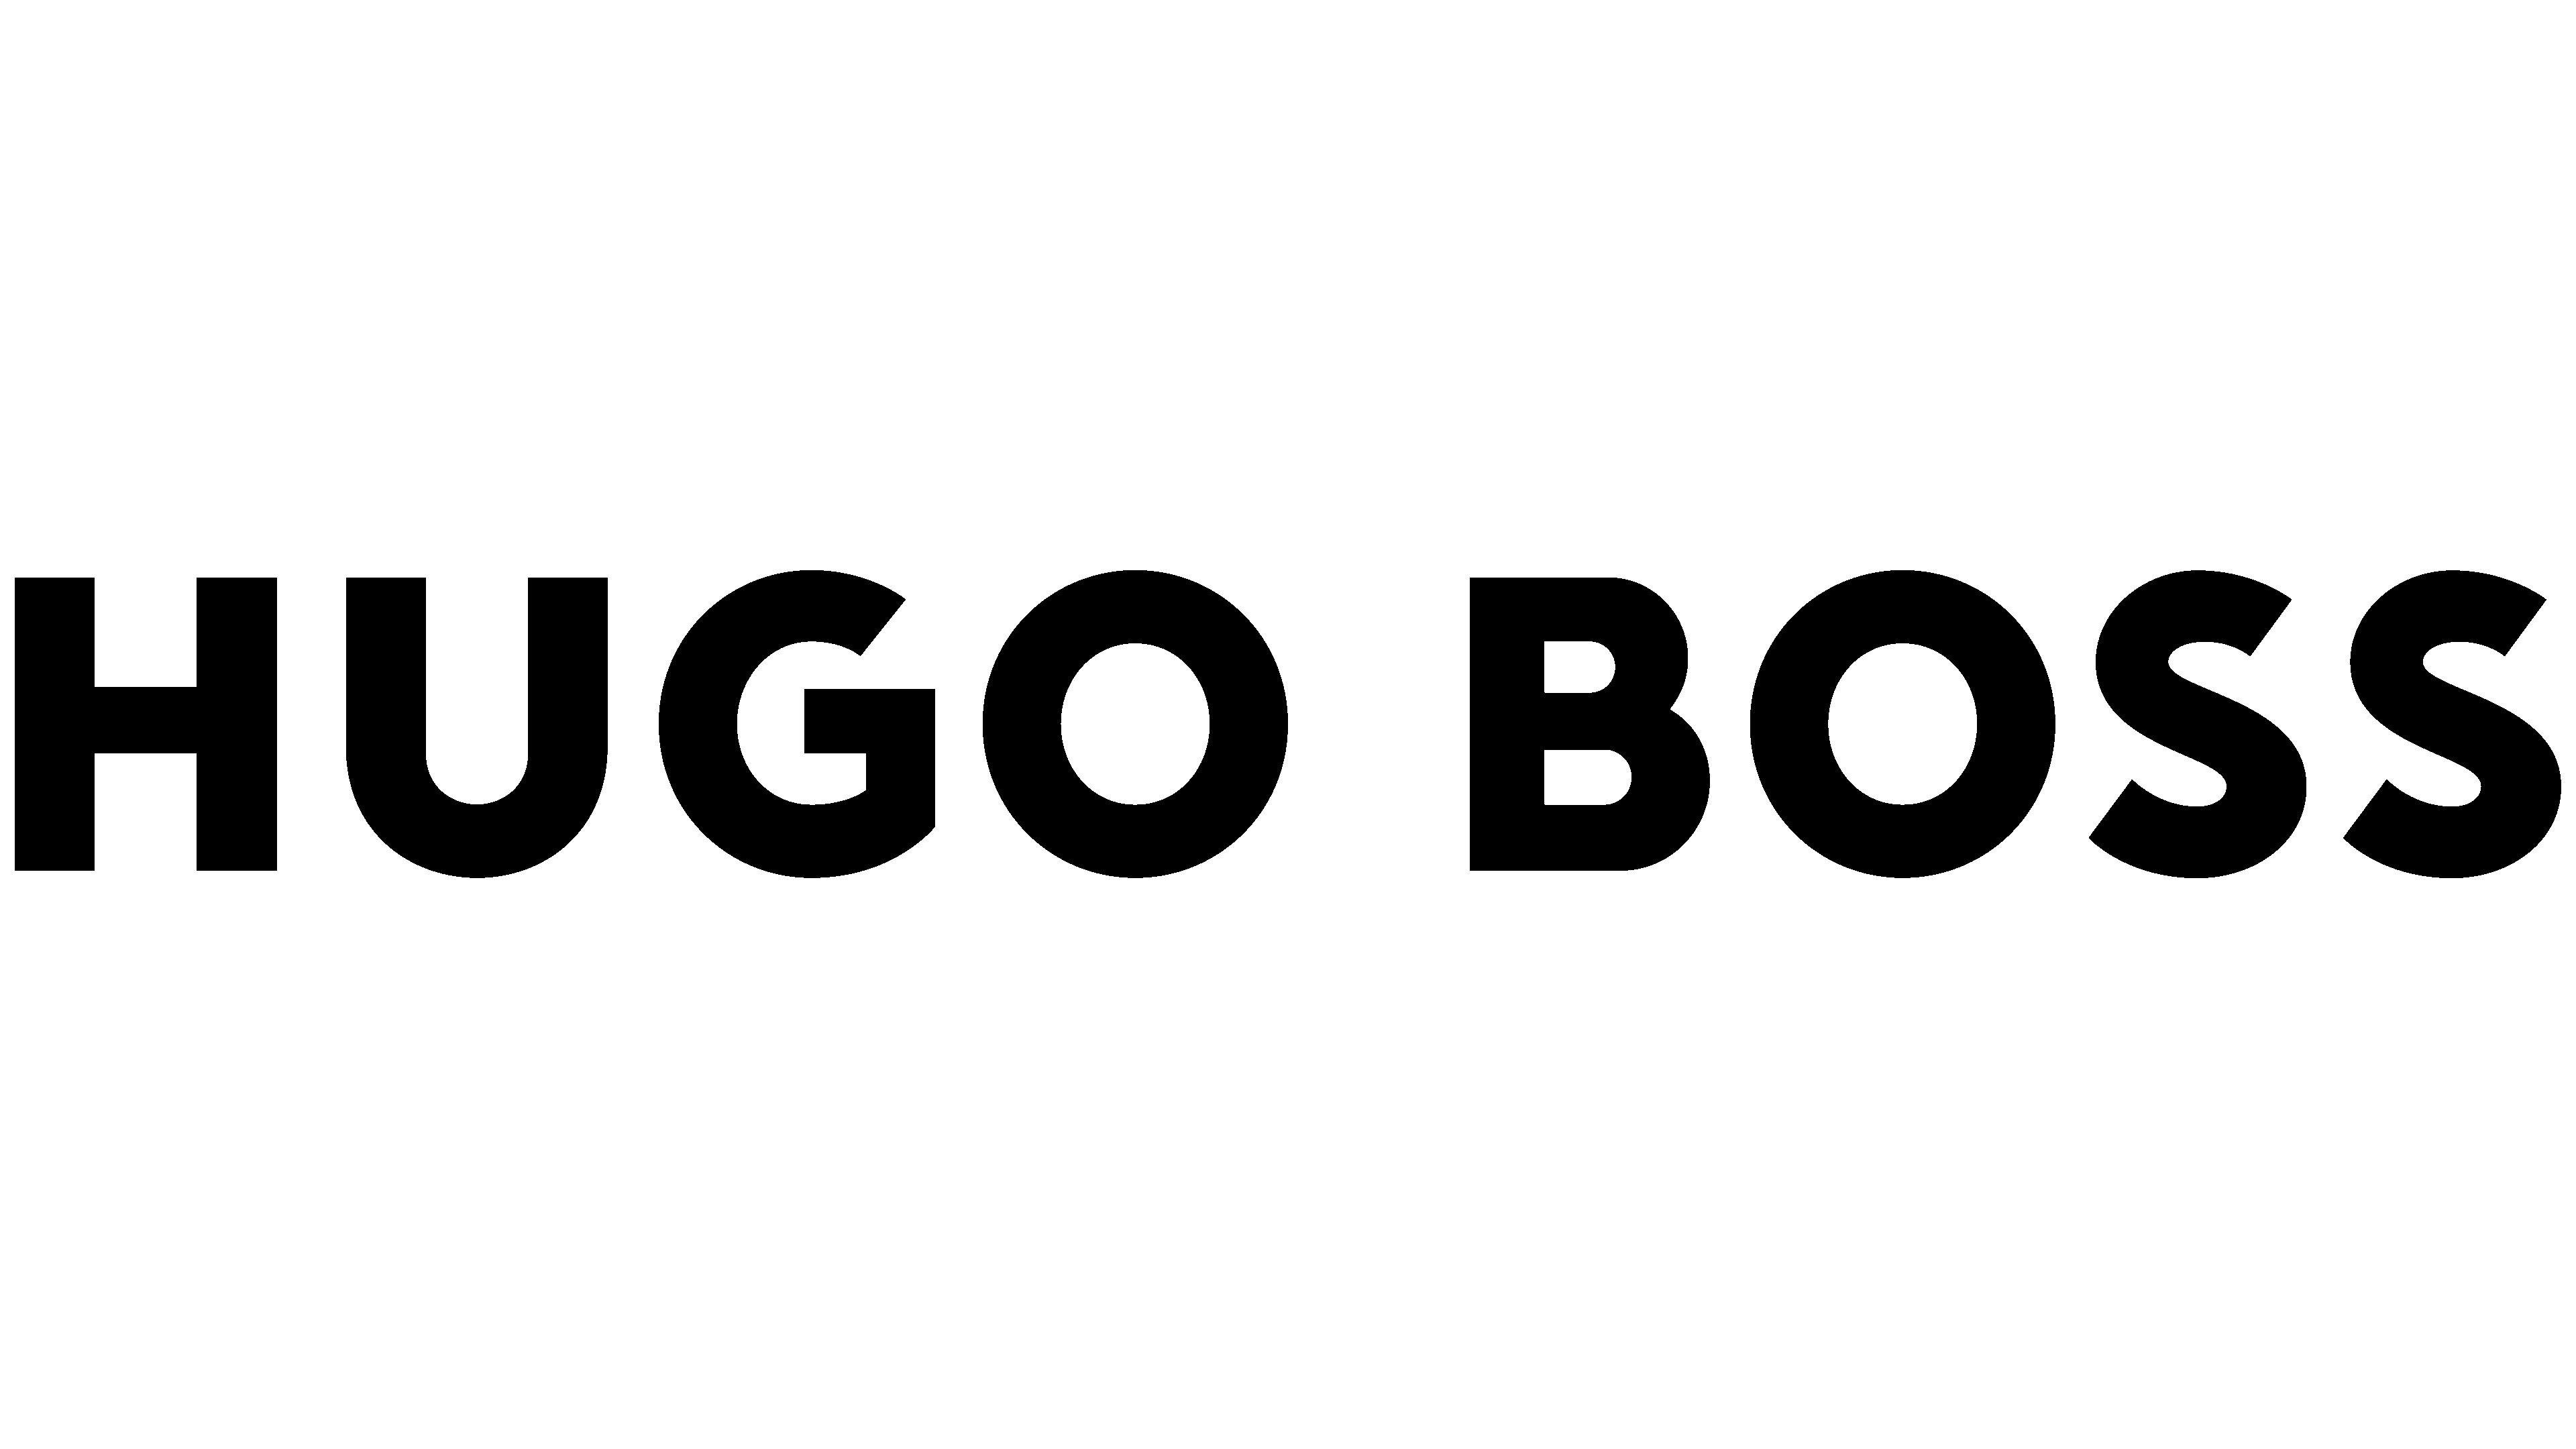 Hugo Boss Logo Significado Del Logotipo, Png, Vector | vlr.eng.br